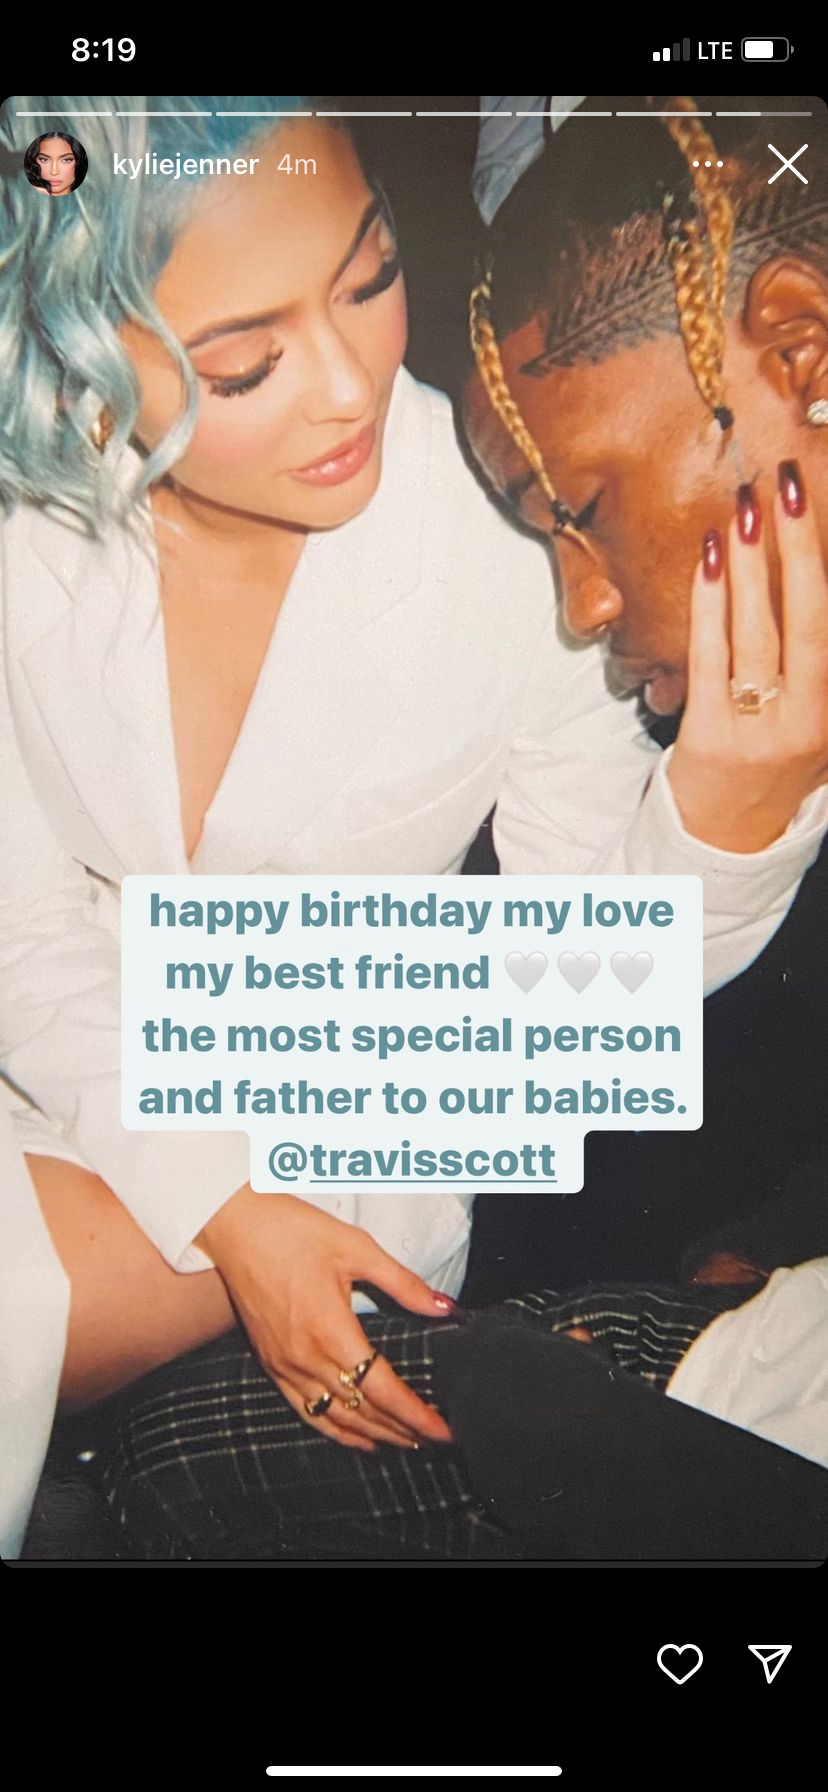 Kylie Jenner wishes Travis Scott a happy birthday